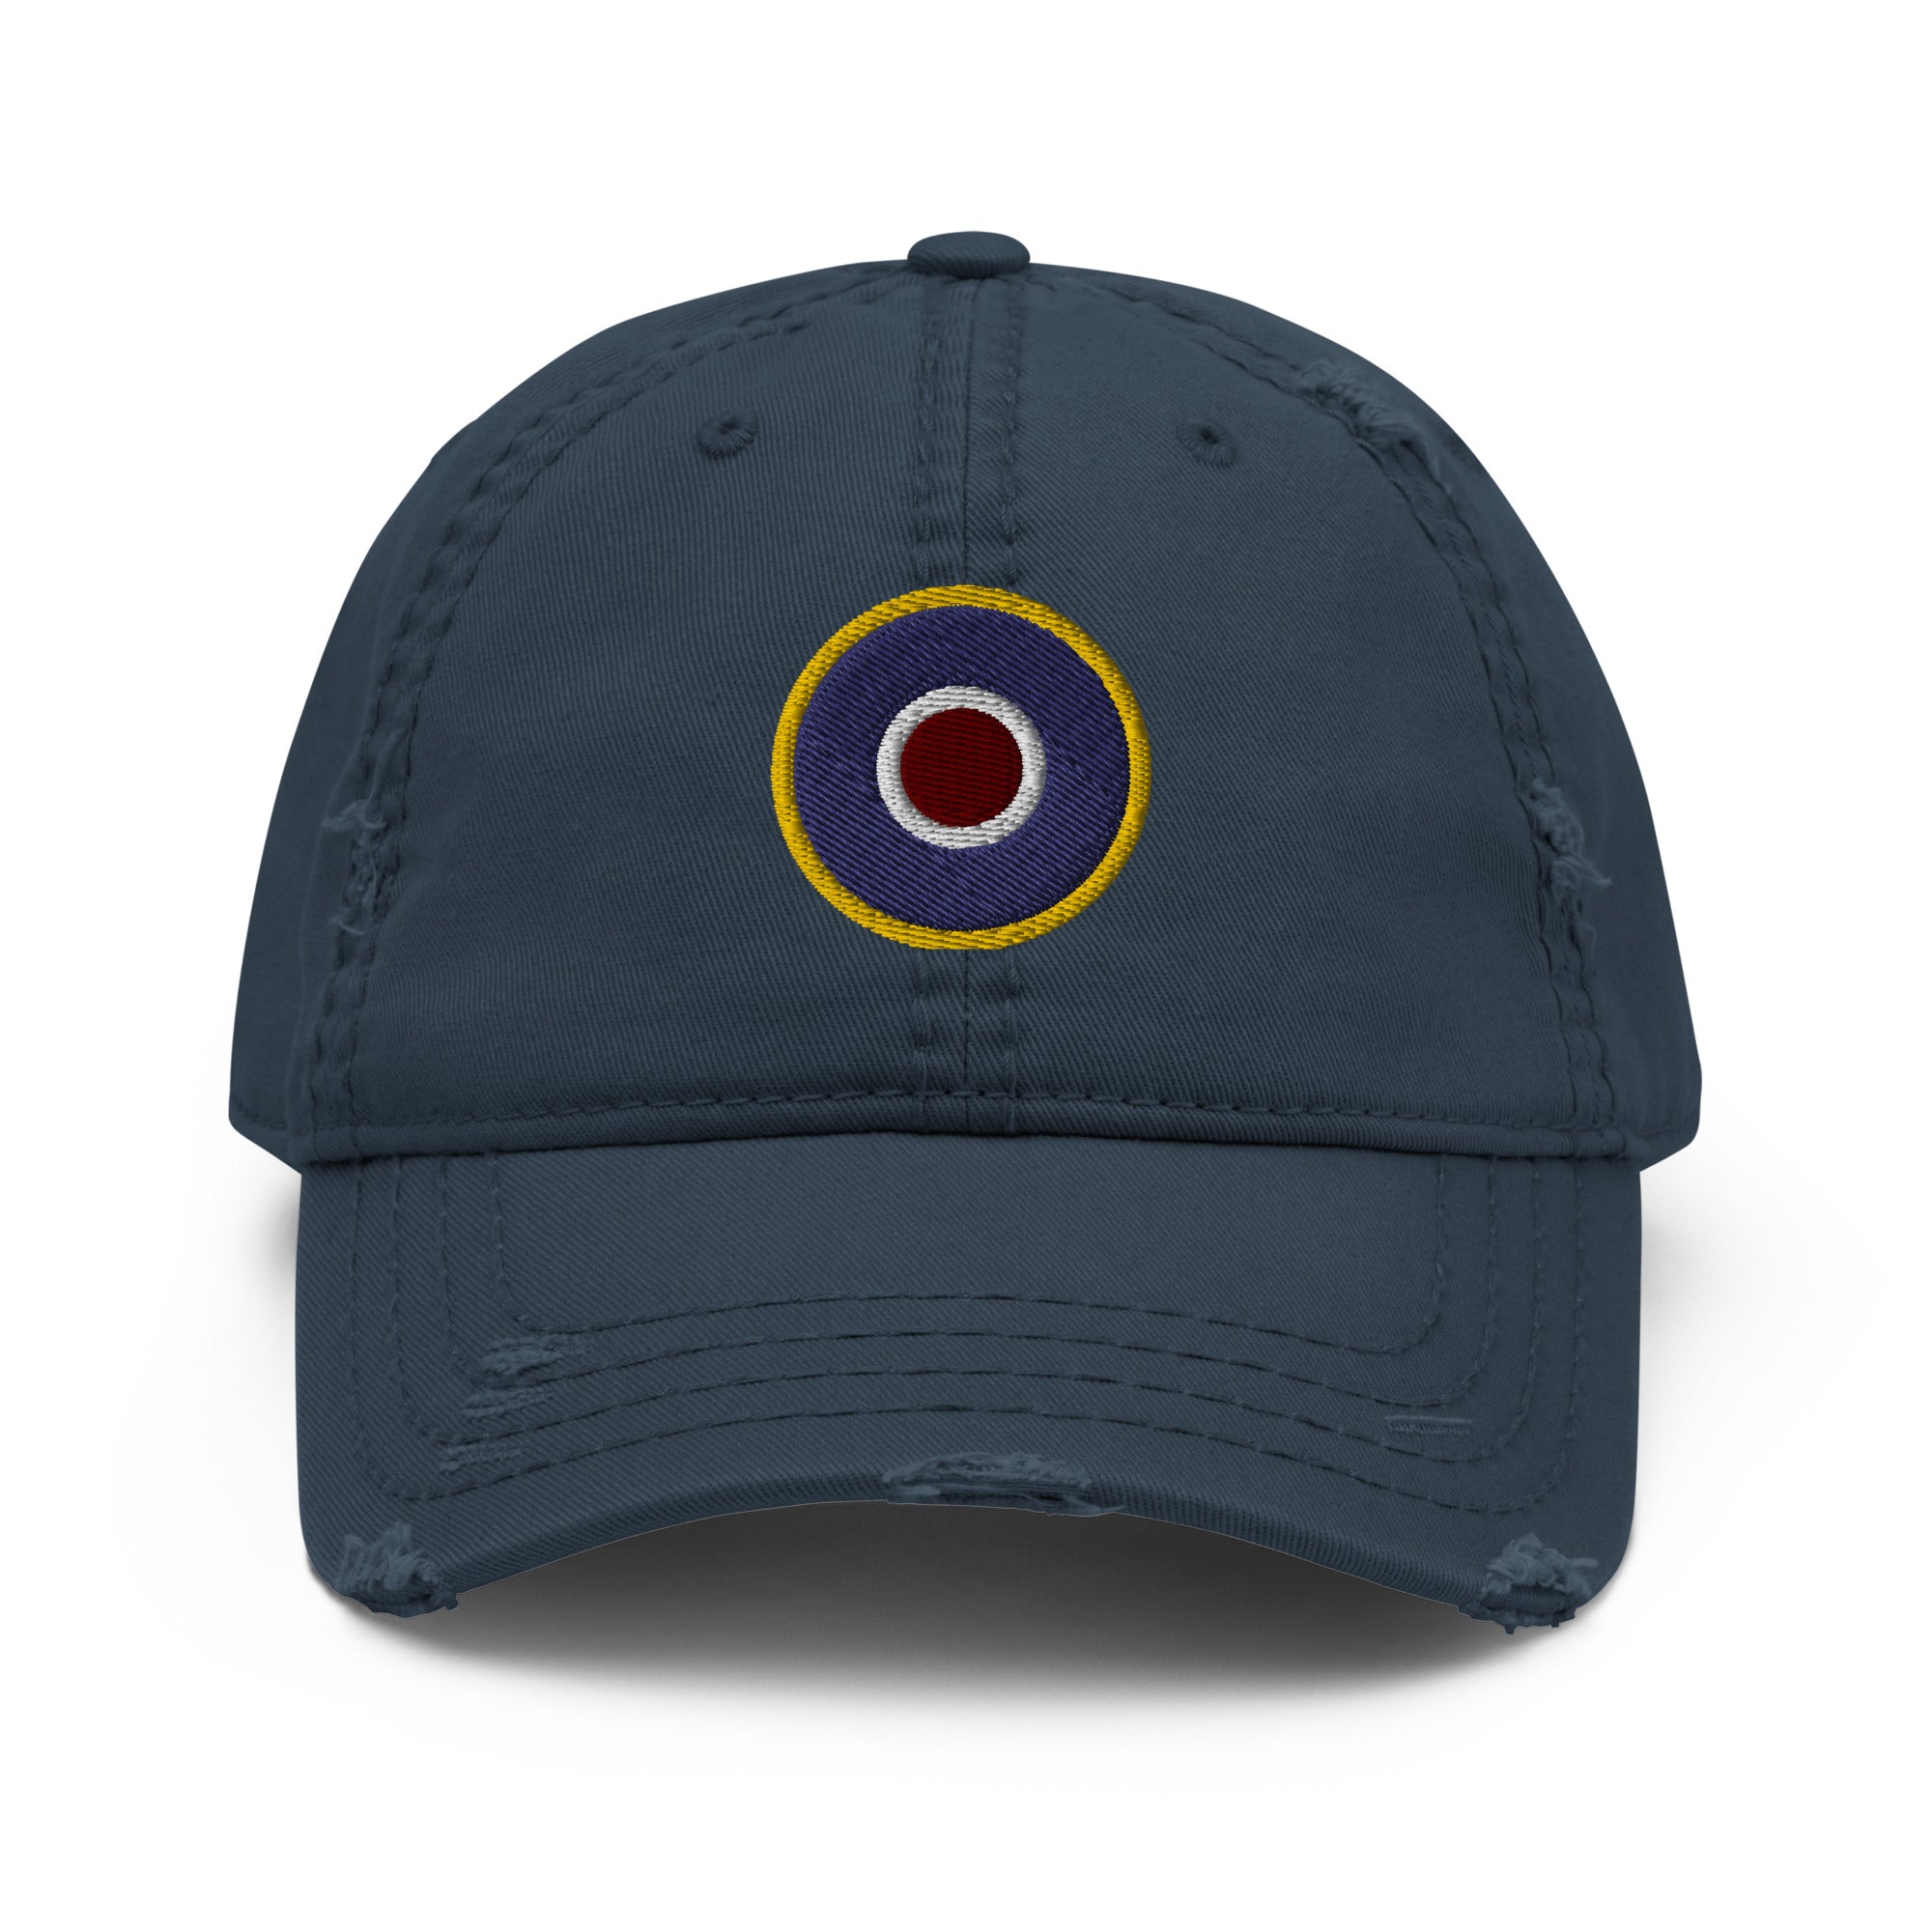 British Airforce Roundel Type C.1 Distressed Hat